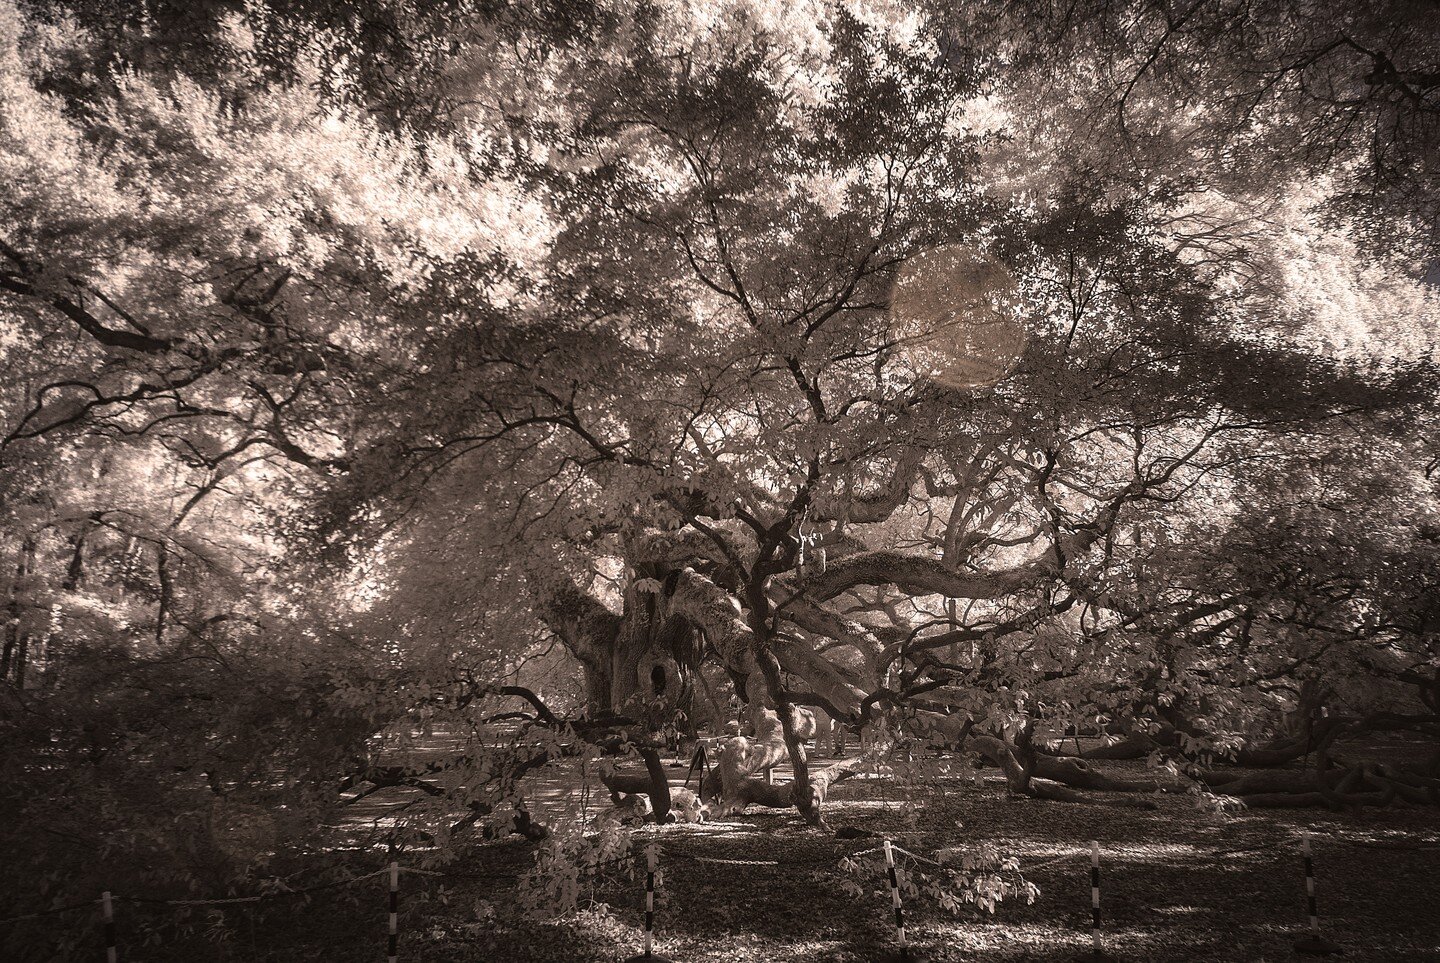 Angel Oak
Infrared Photography
Womick.net
.
,
,
,
,
,
,
,
,
,
,
,
#Infraredworld
#infraredphotography
#infrared 
#angeloak 
#charlestonsc 
#southcarolina 
#Photography
#Treephotography
#fineartphotography 
#TreeLover
#AncientTree
#NaturePhotography
#